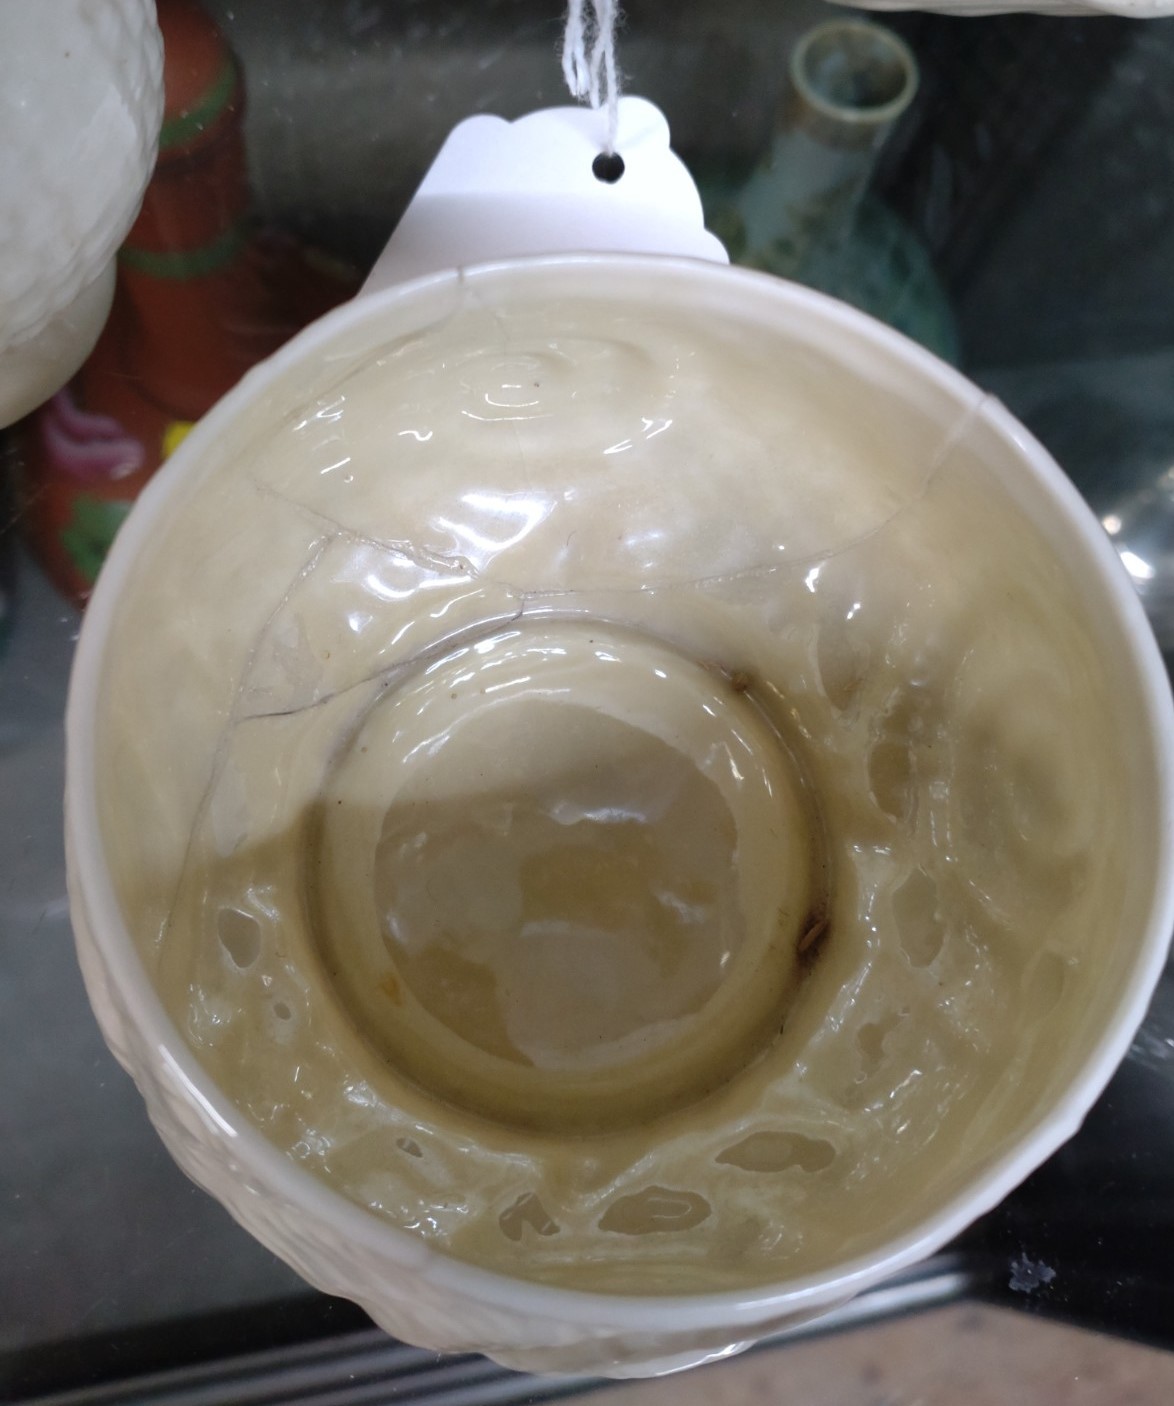 Beleek Shamrock jug and shell jug, both 9.5cm high, shamrock bowl and shell bowl, both 9cm - Image 2 of 3